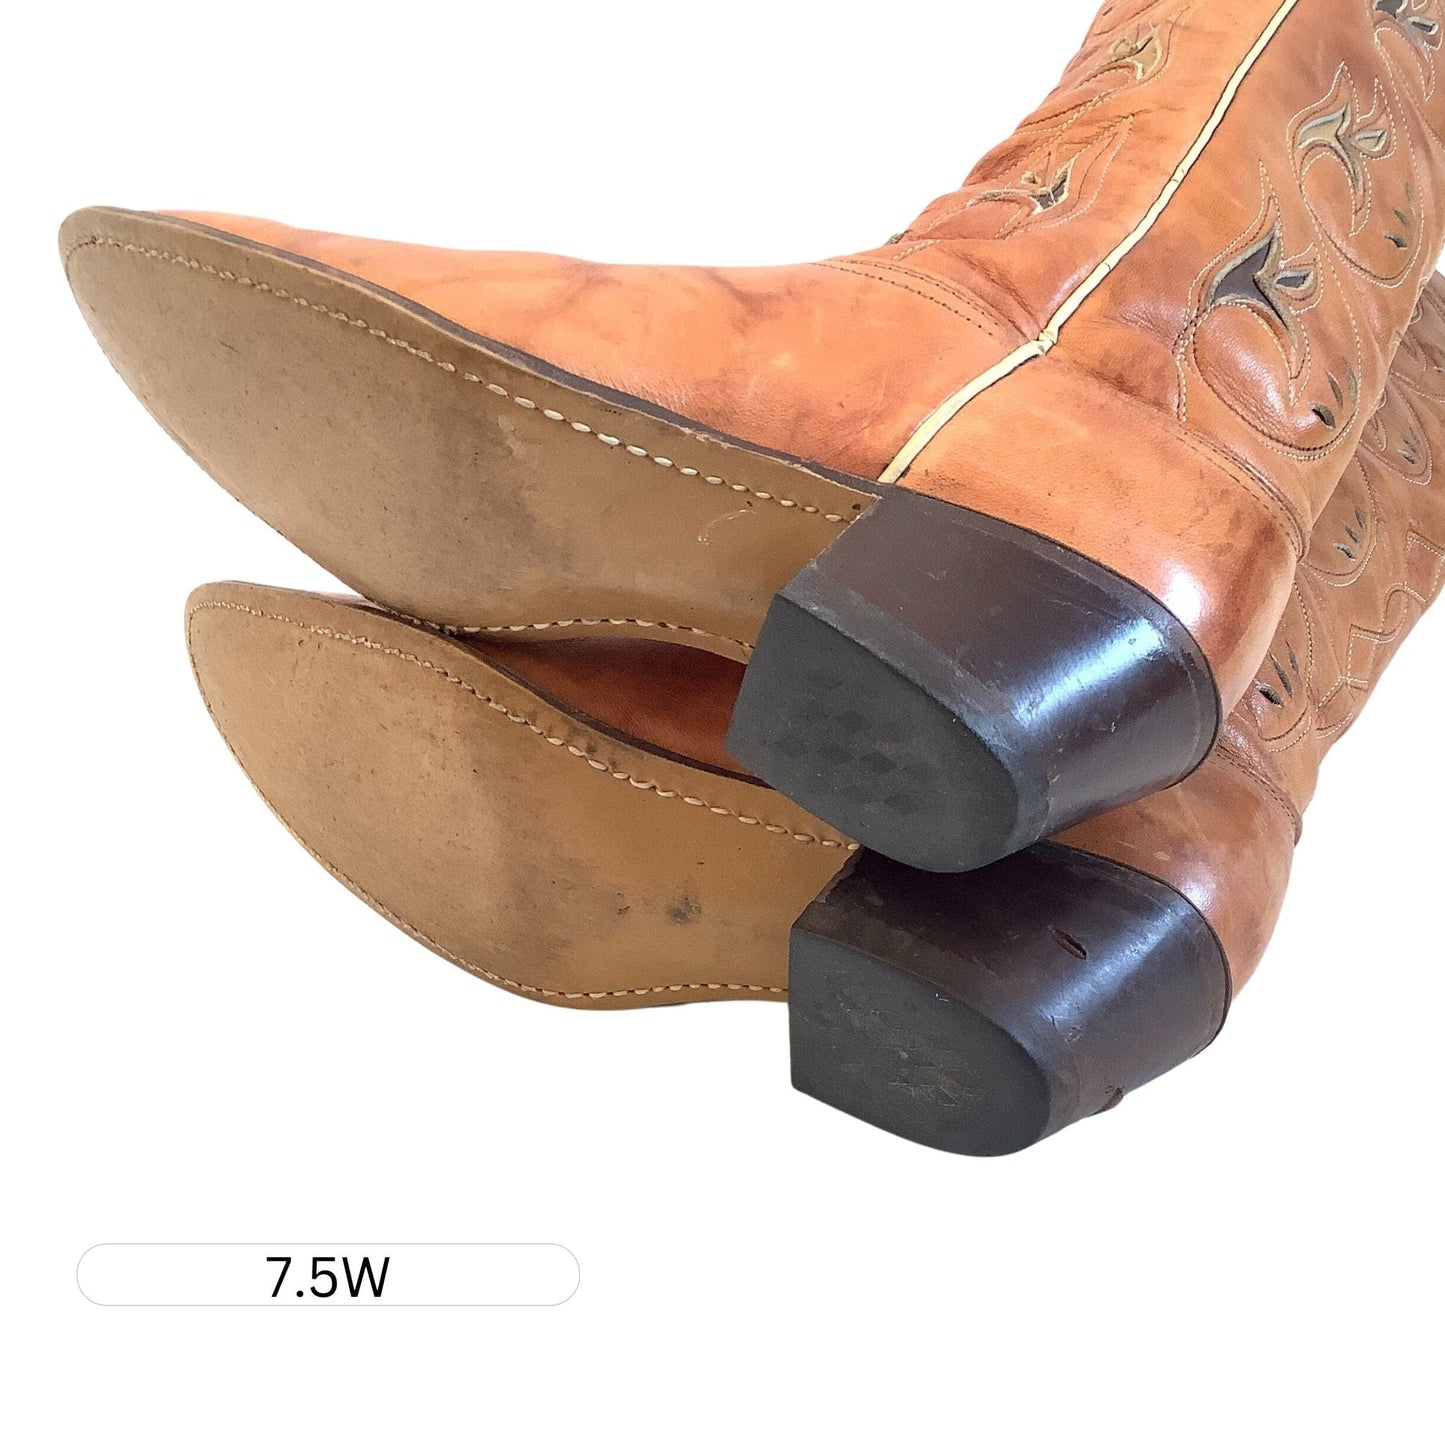 Vintage Tall Cowboy Boots